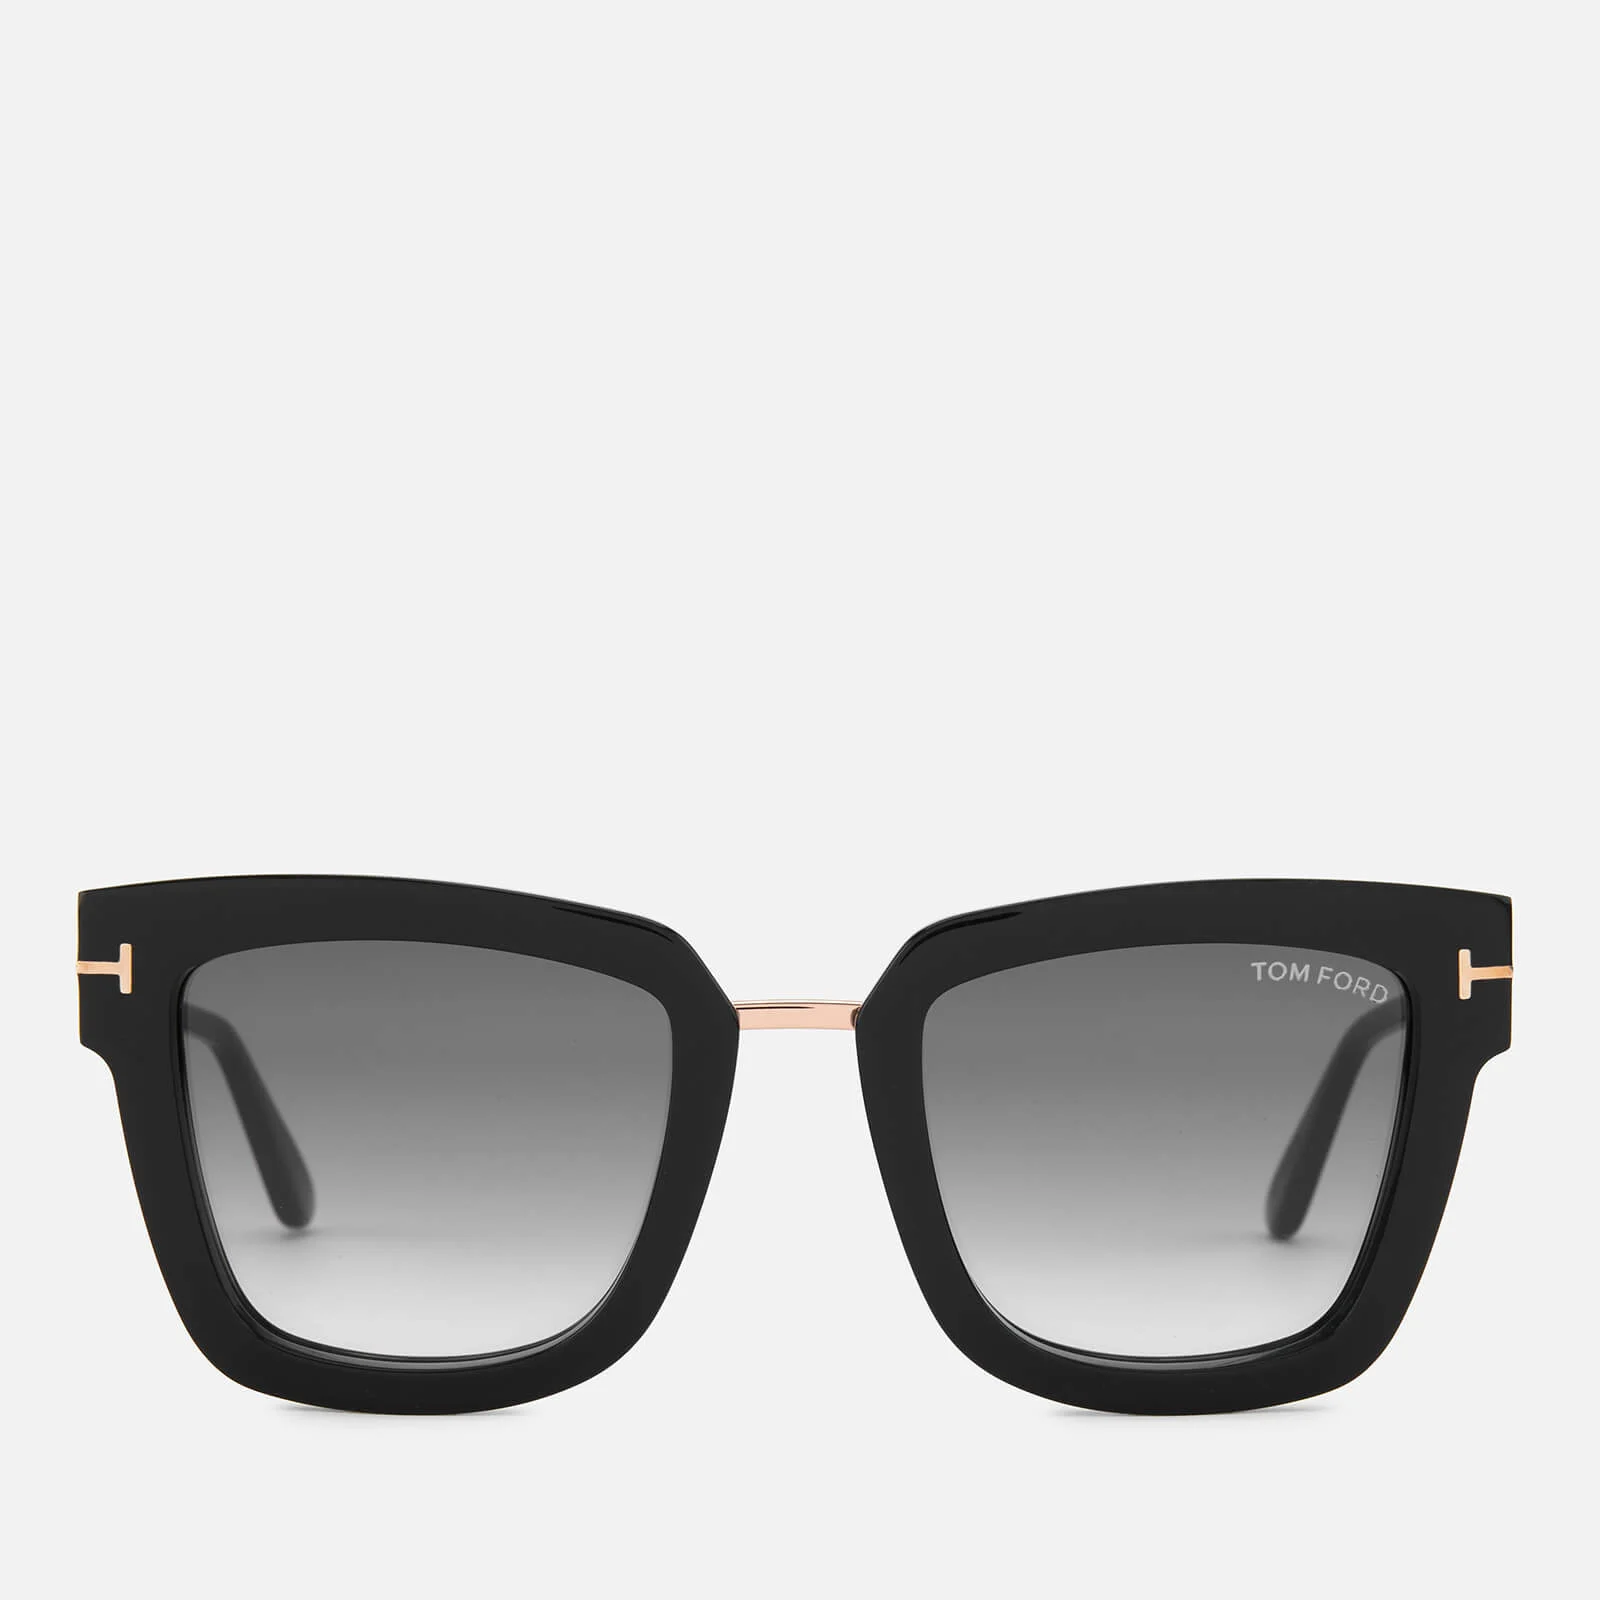 Tom Ford Women's Lara Square Frame Sunglasses - Black/Smoke Image 1